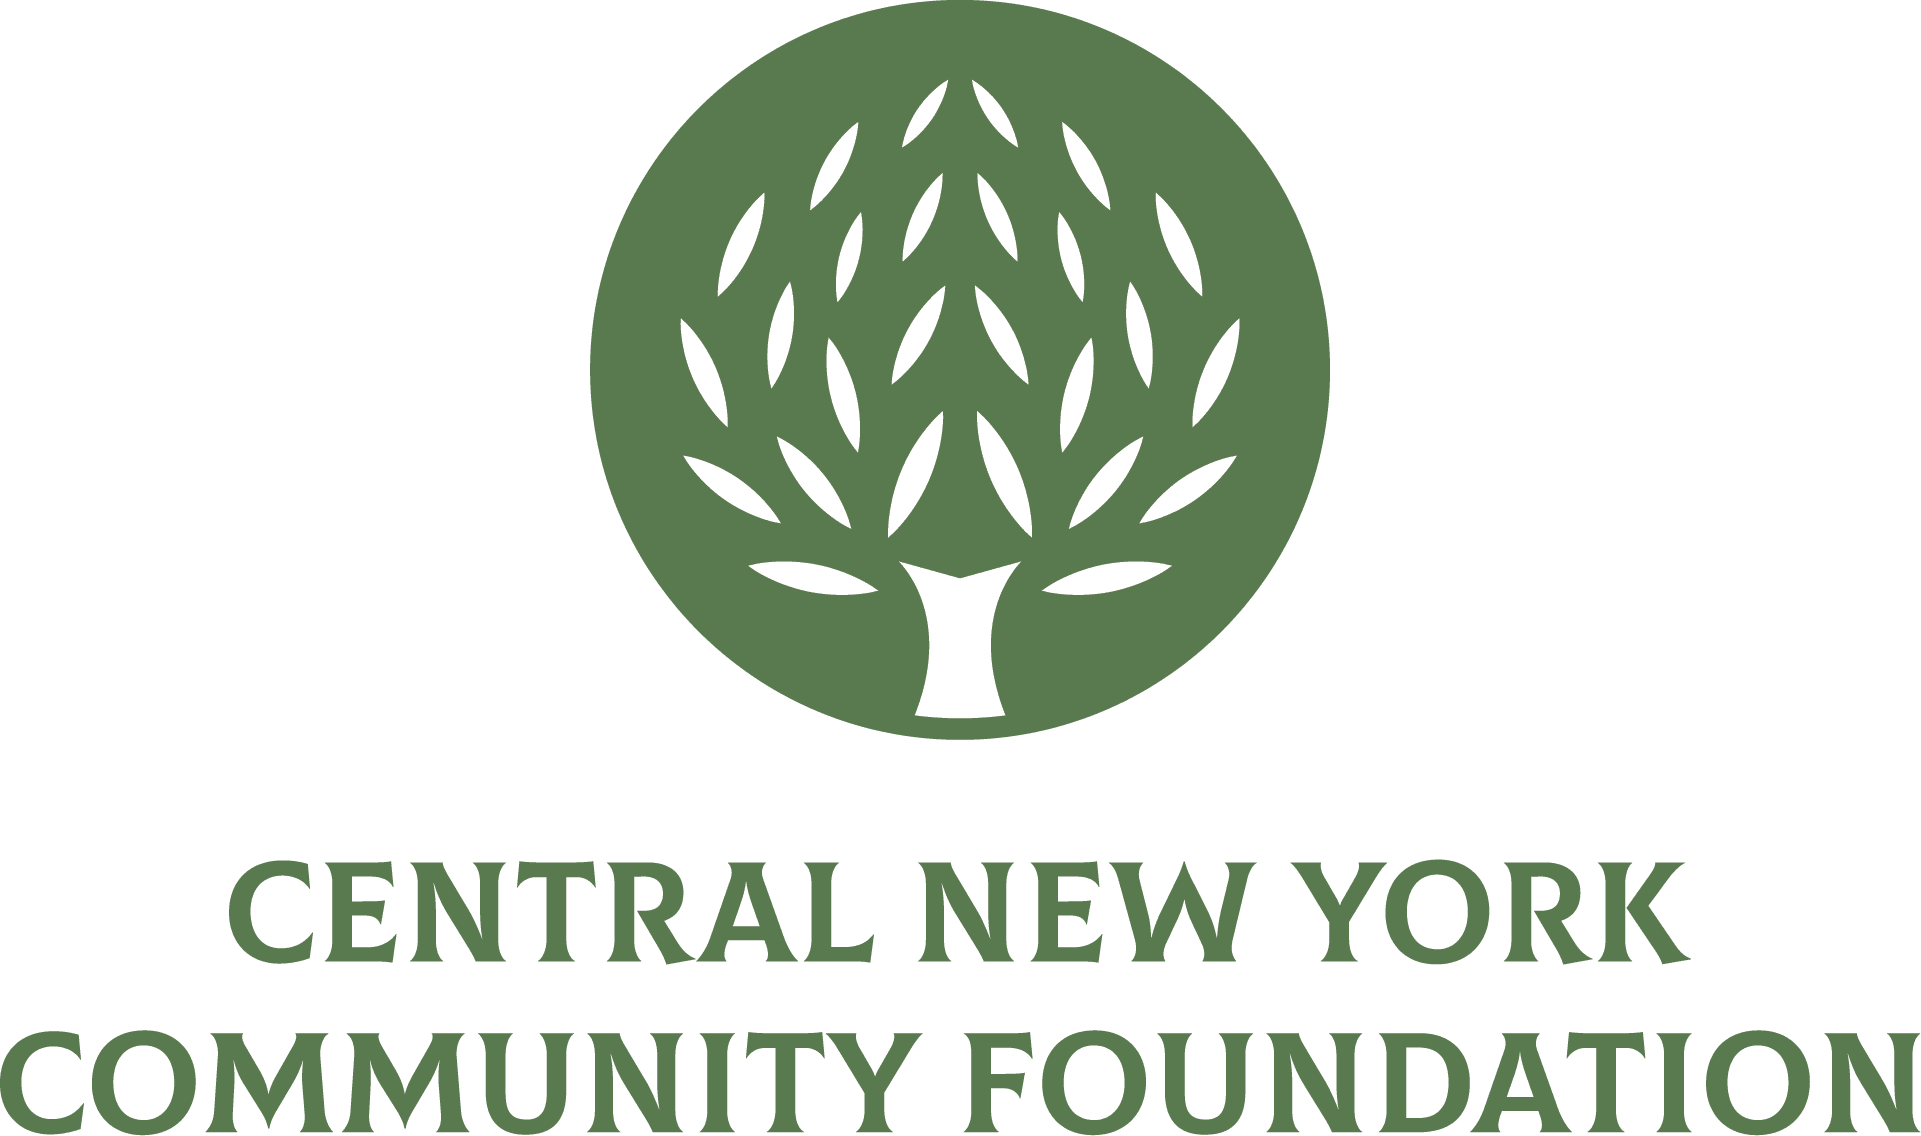 Central New York Community Foundation